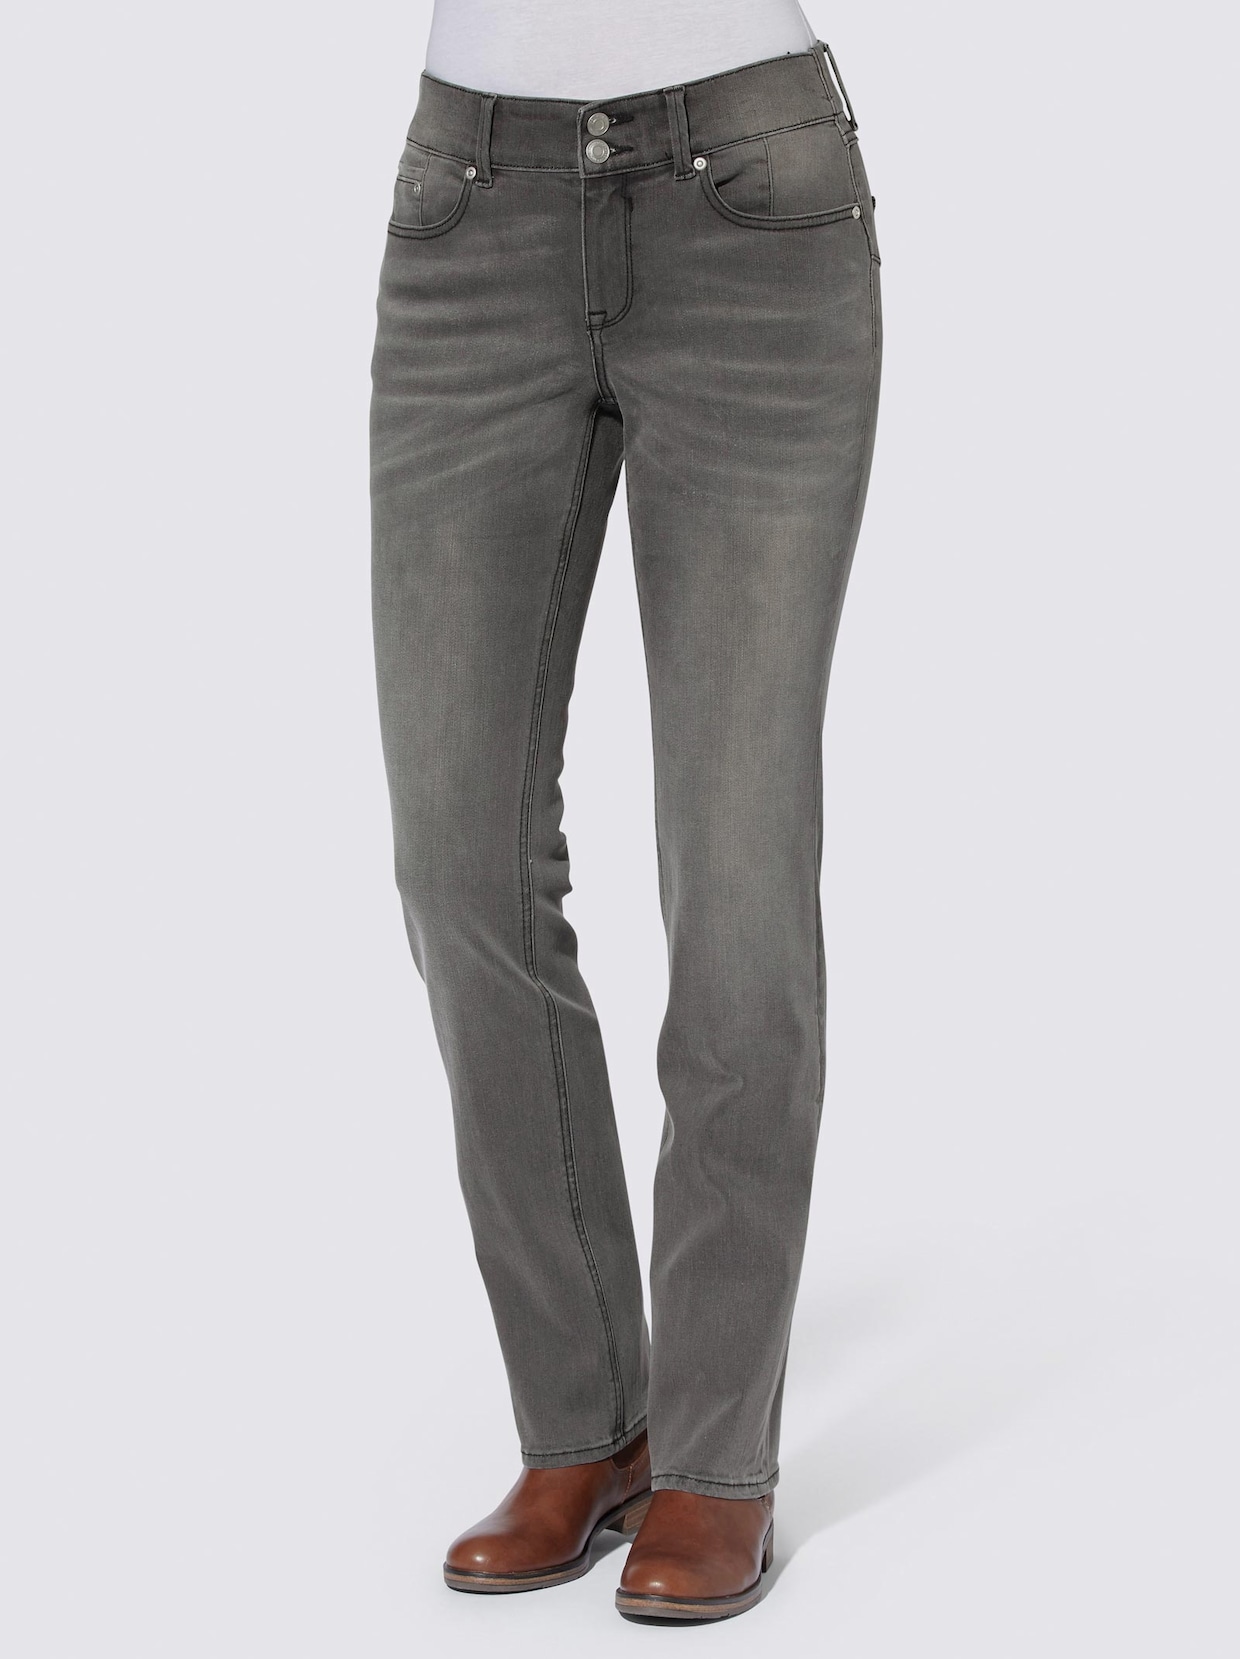 Jeans - dark grey-denim